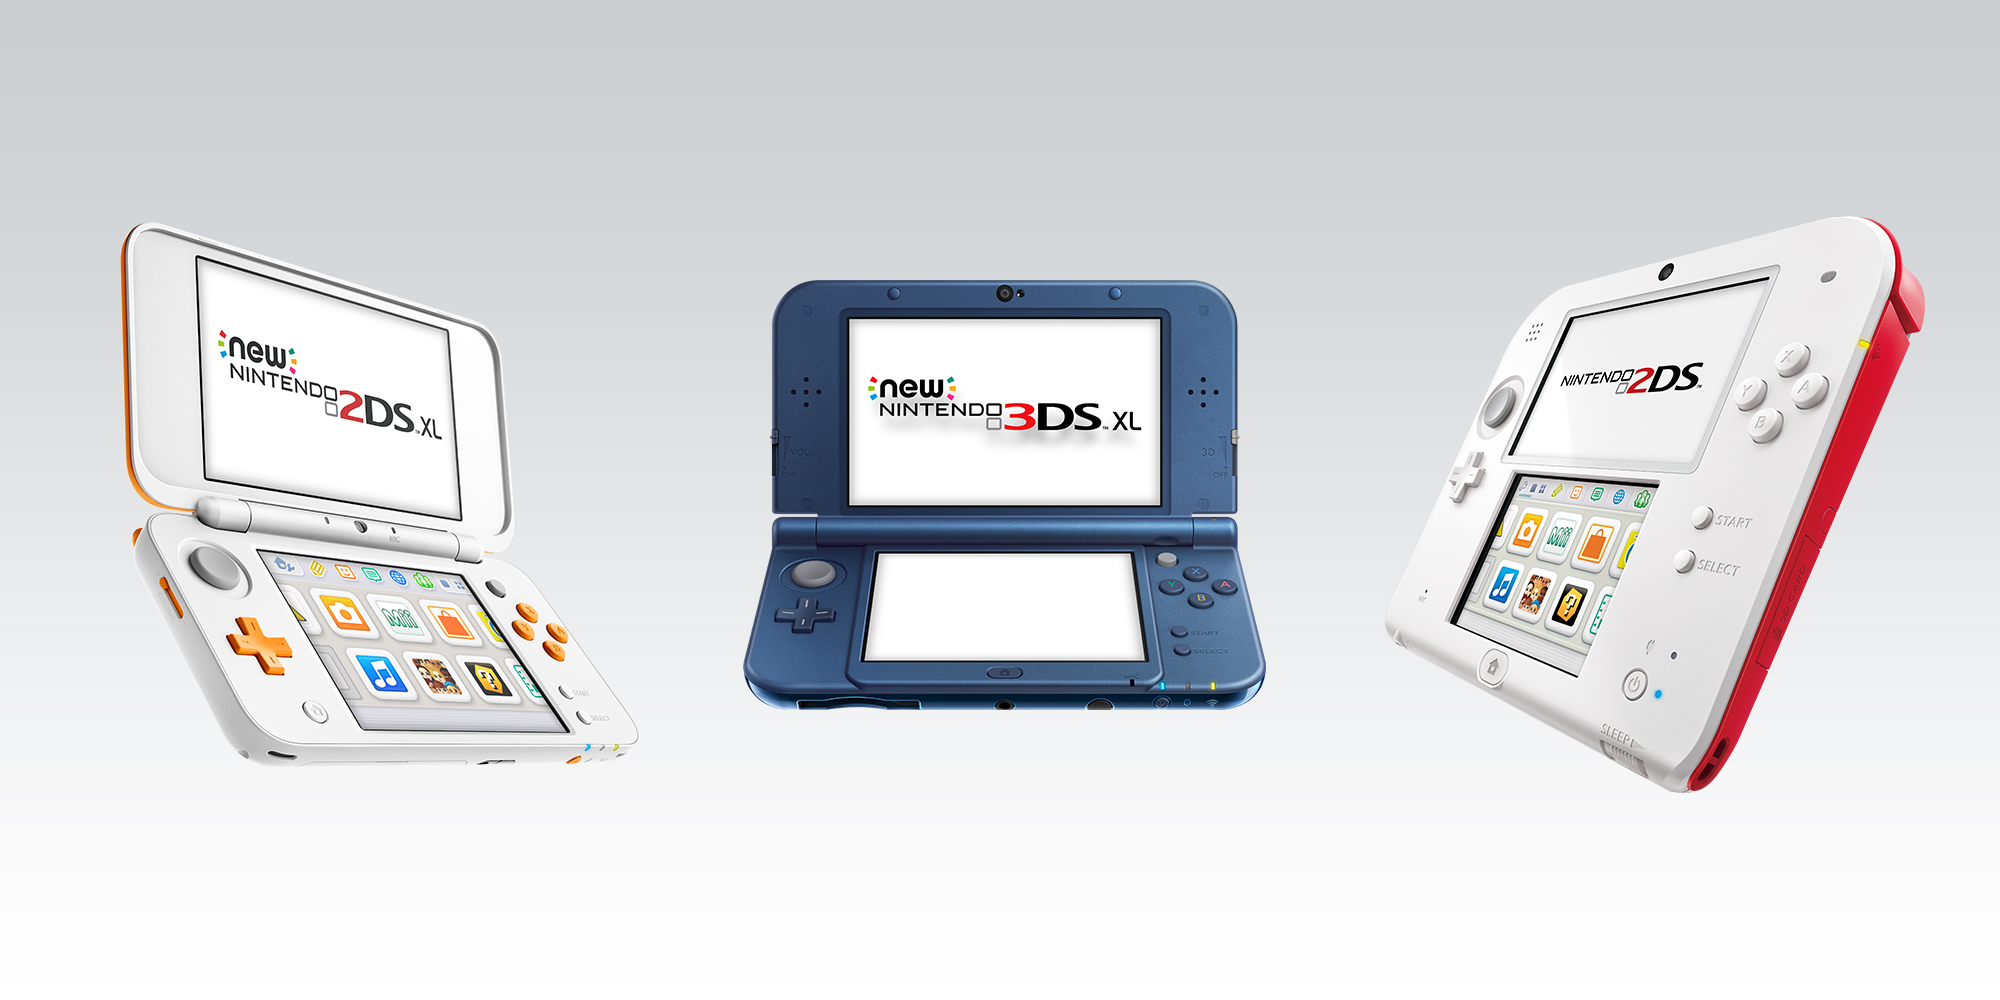 The Nintendo 3DS family has been discontinued | KitGuru